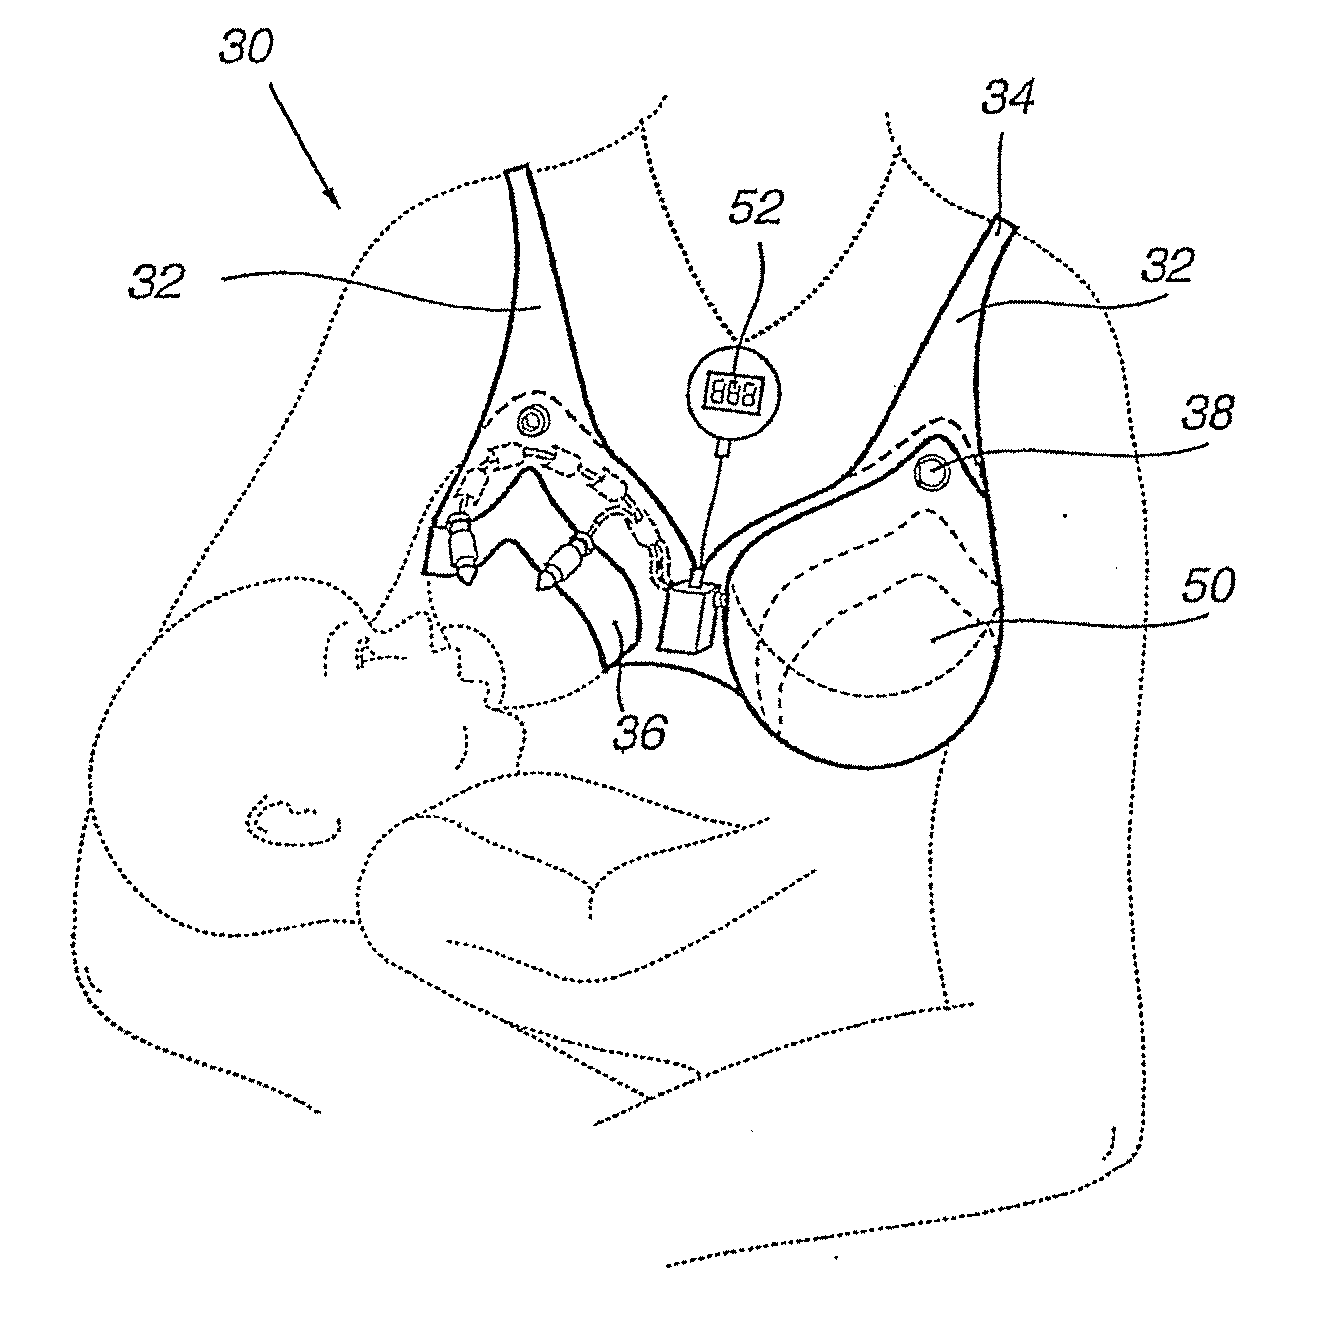 Breast milk flow meter apparatus and method